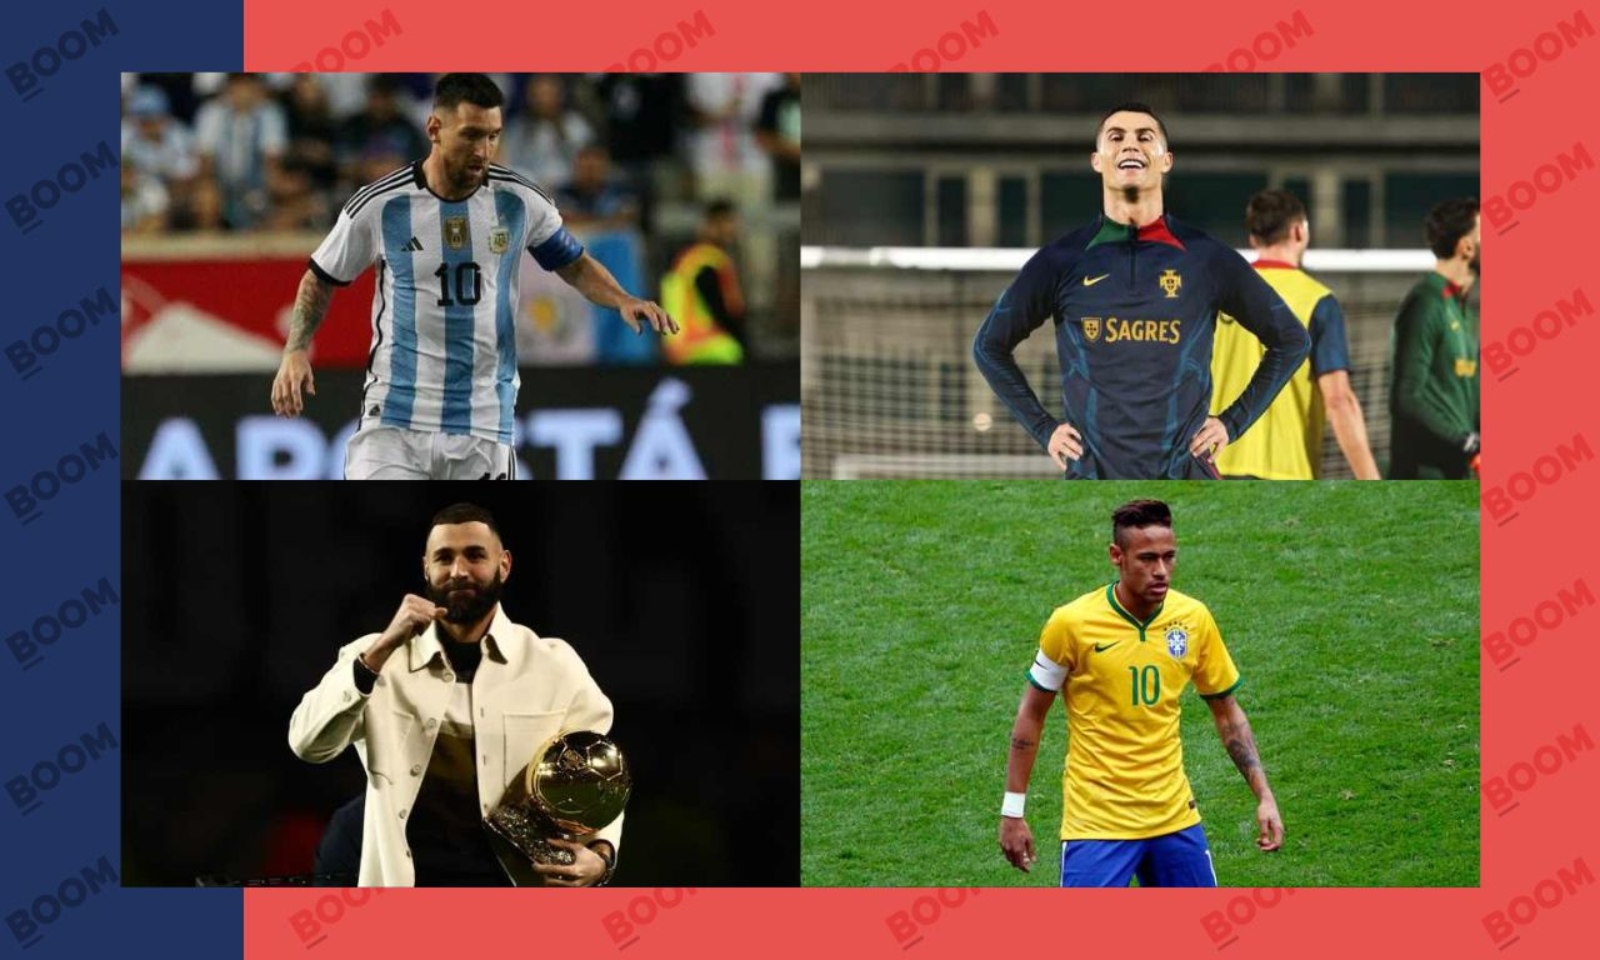 The June Shop - Are you Team Ronaldo or Team Messi?😍 . . . .  #fifaworldcup2022 #fifacup2022 #ronaldo #messi #cristianoronaldo  #lionelmessi #louisvuitton #memes #footballmeme #footballfans  #footballplayers